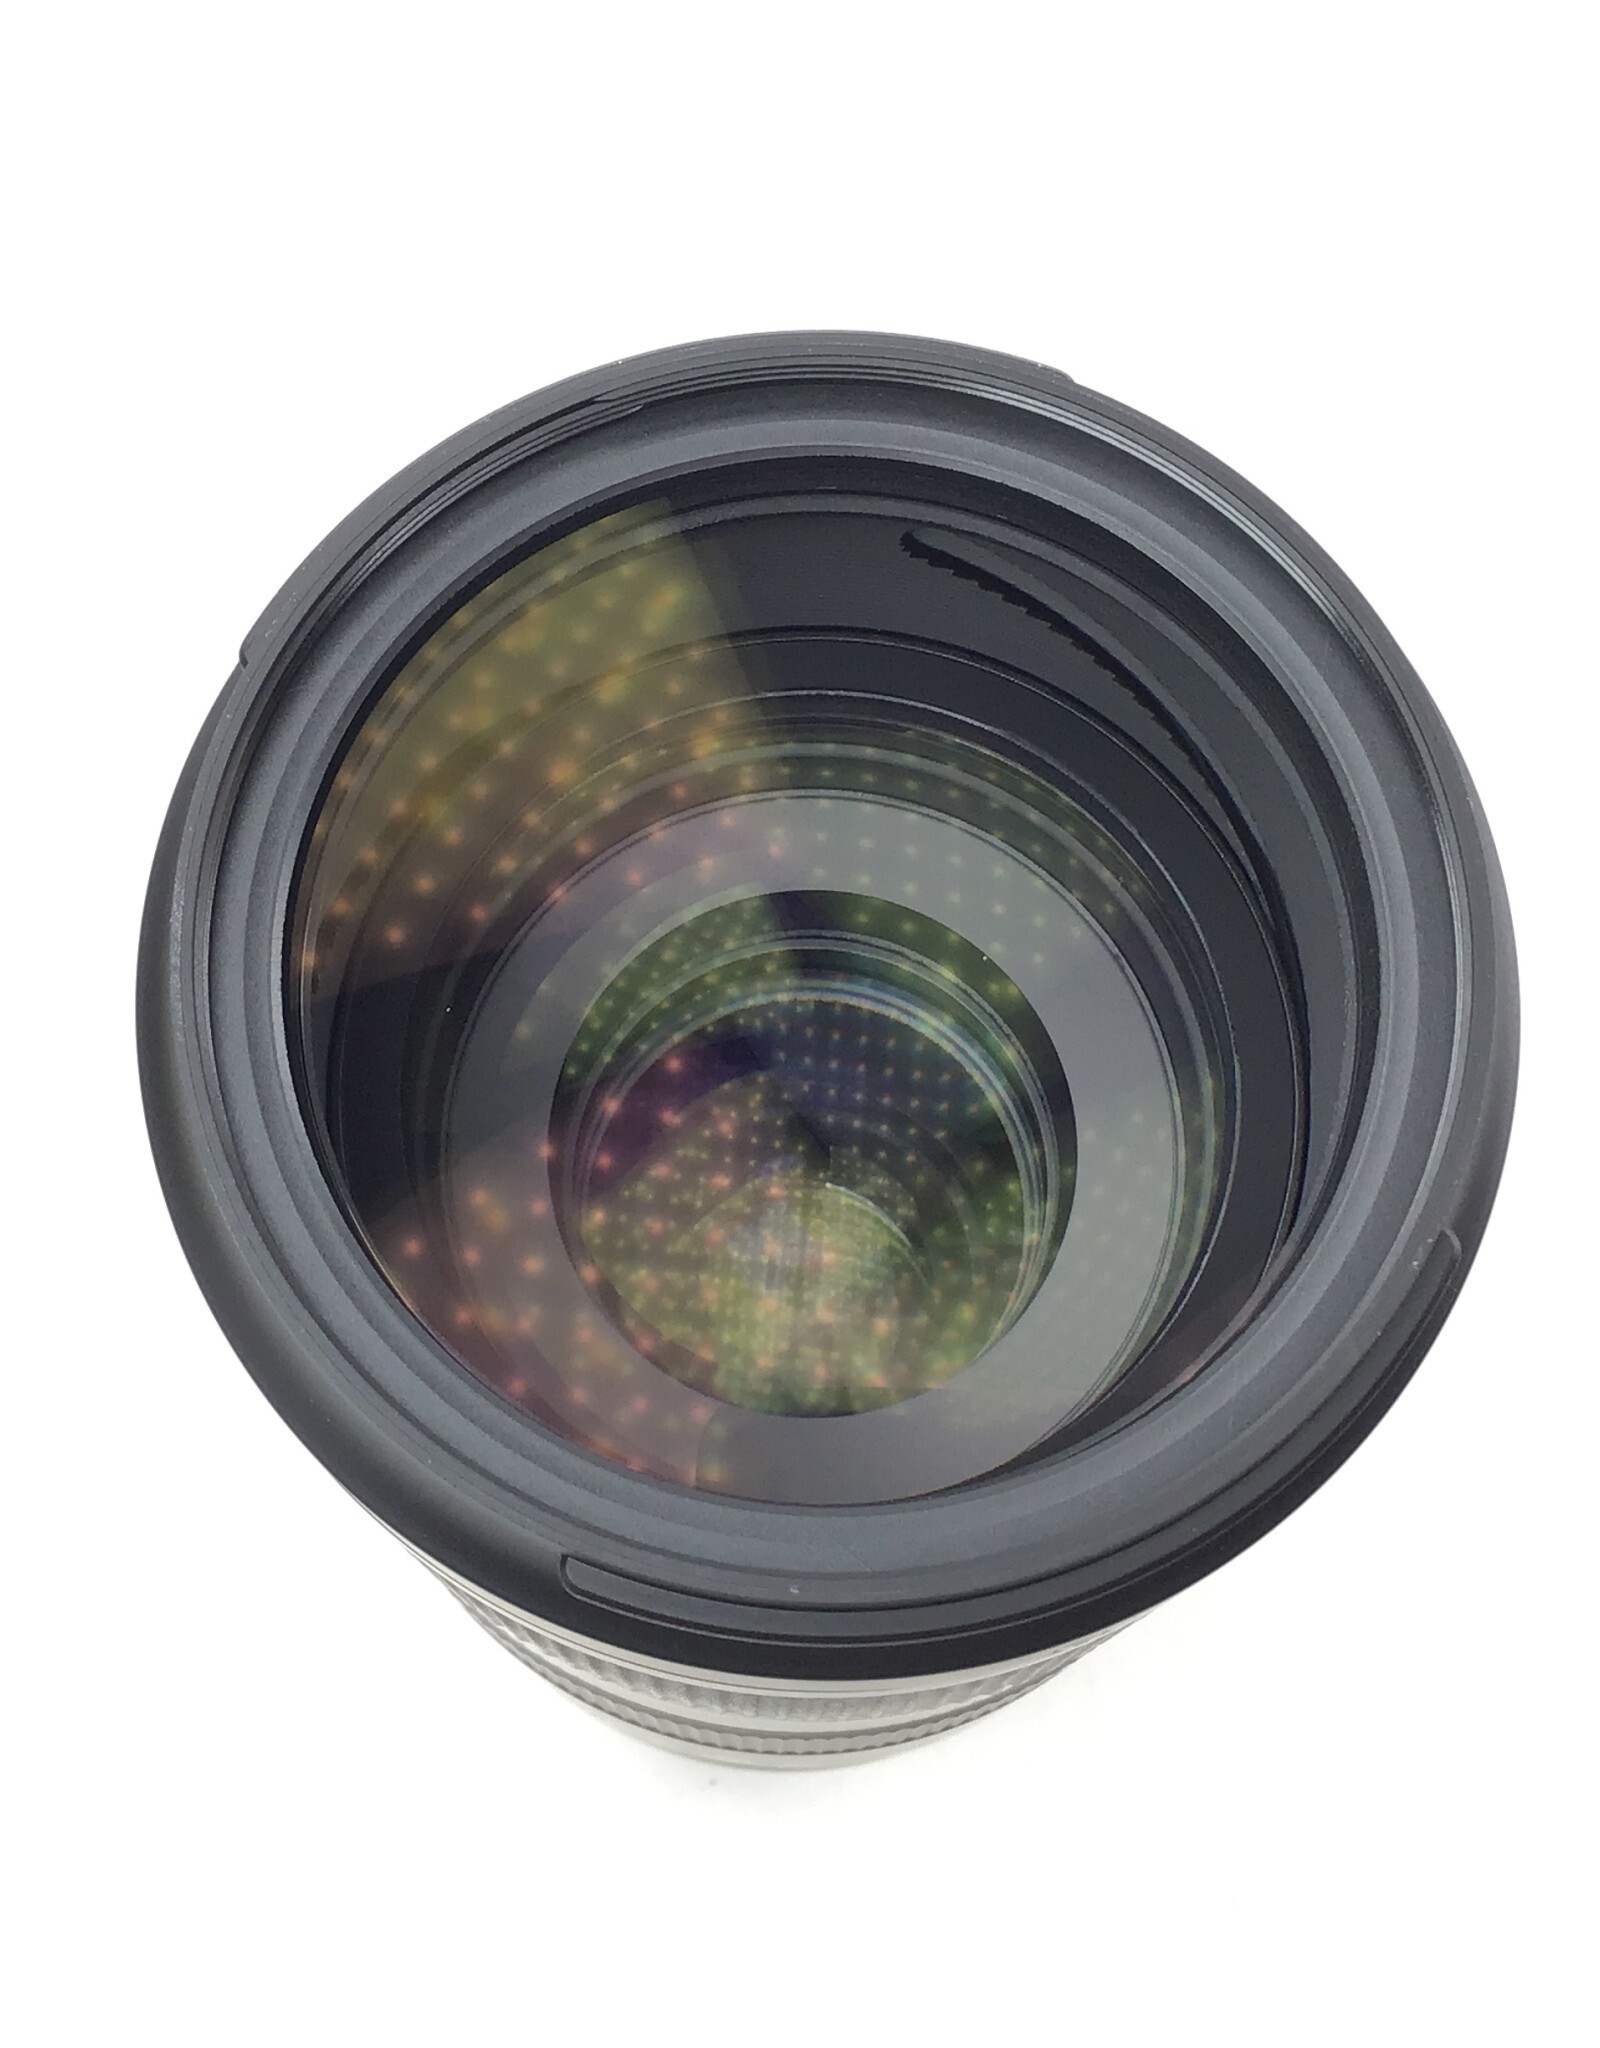 TAMRON Tamron 70-210mm f4 Di VC USD Lens for Nikon in Box LN